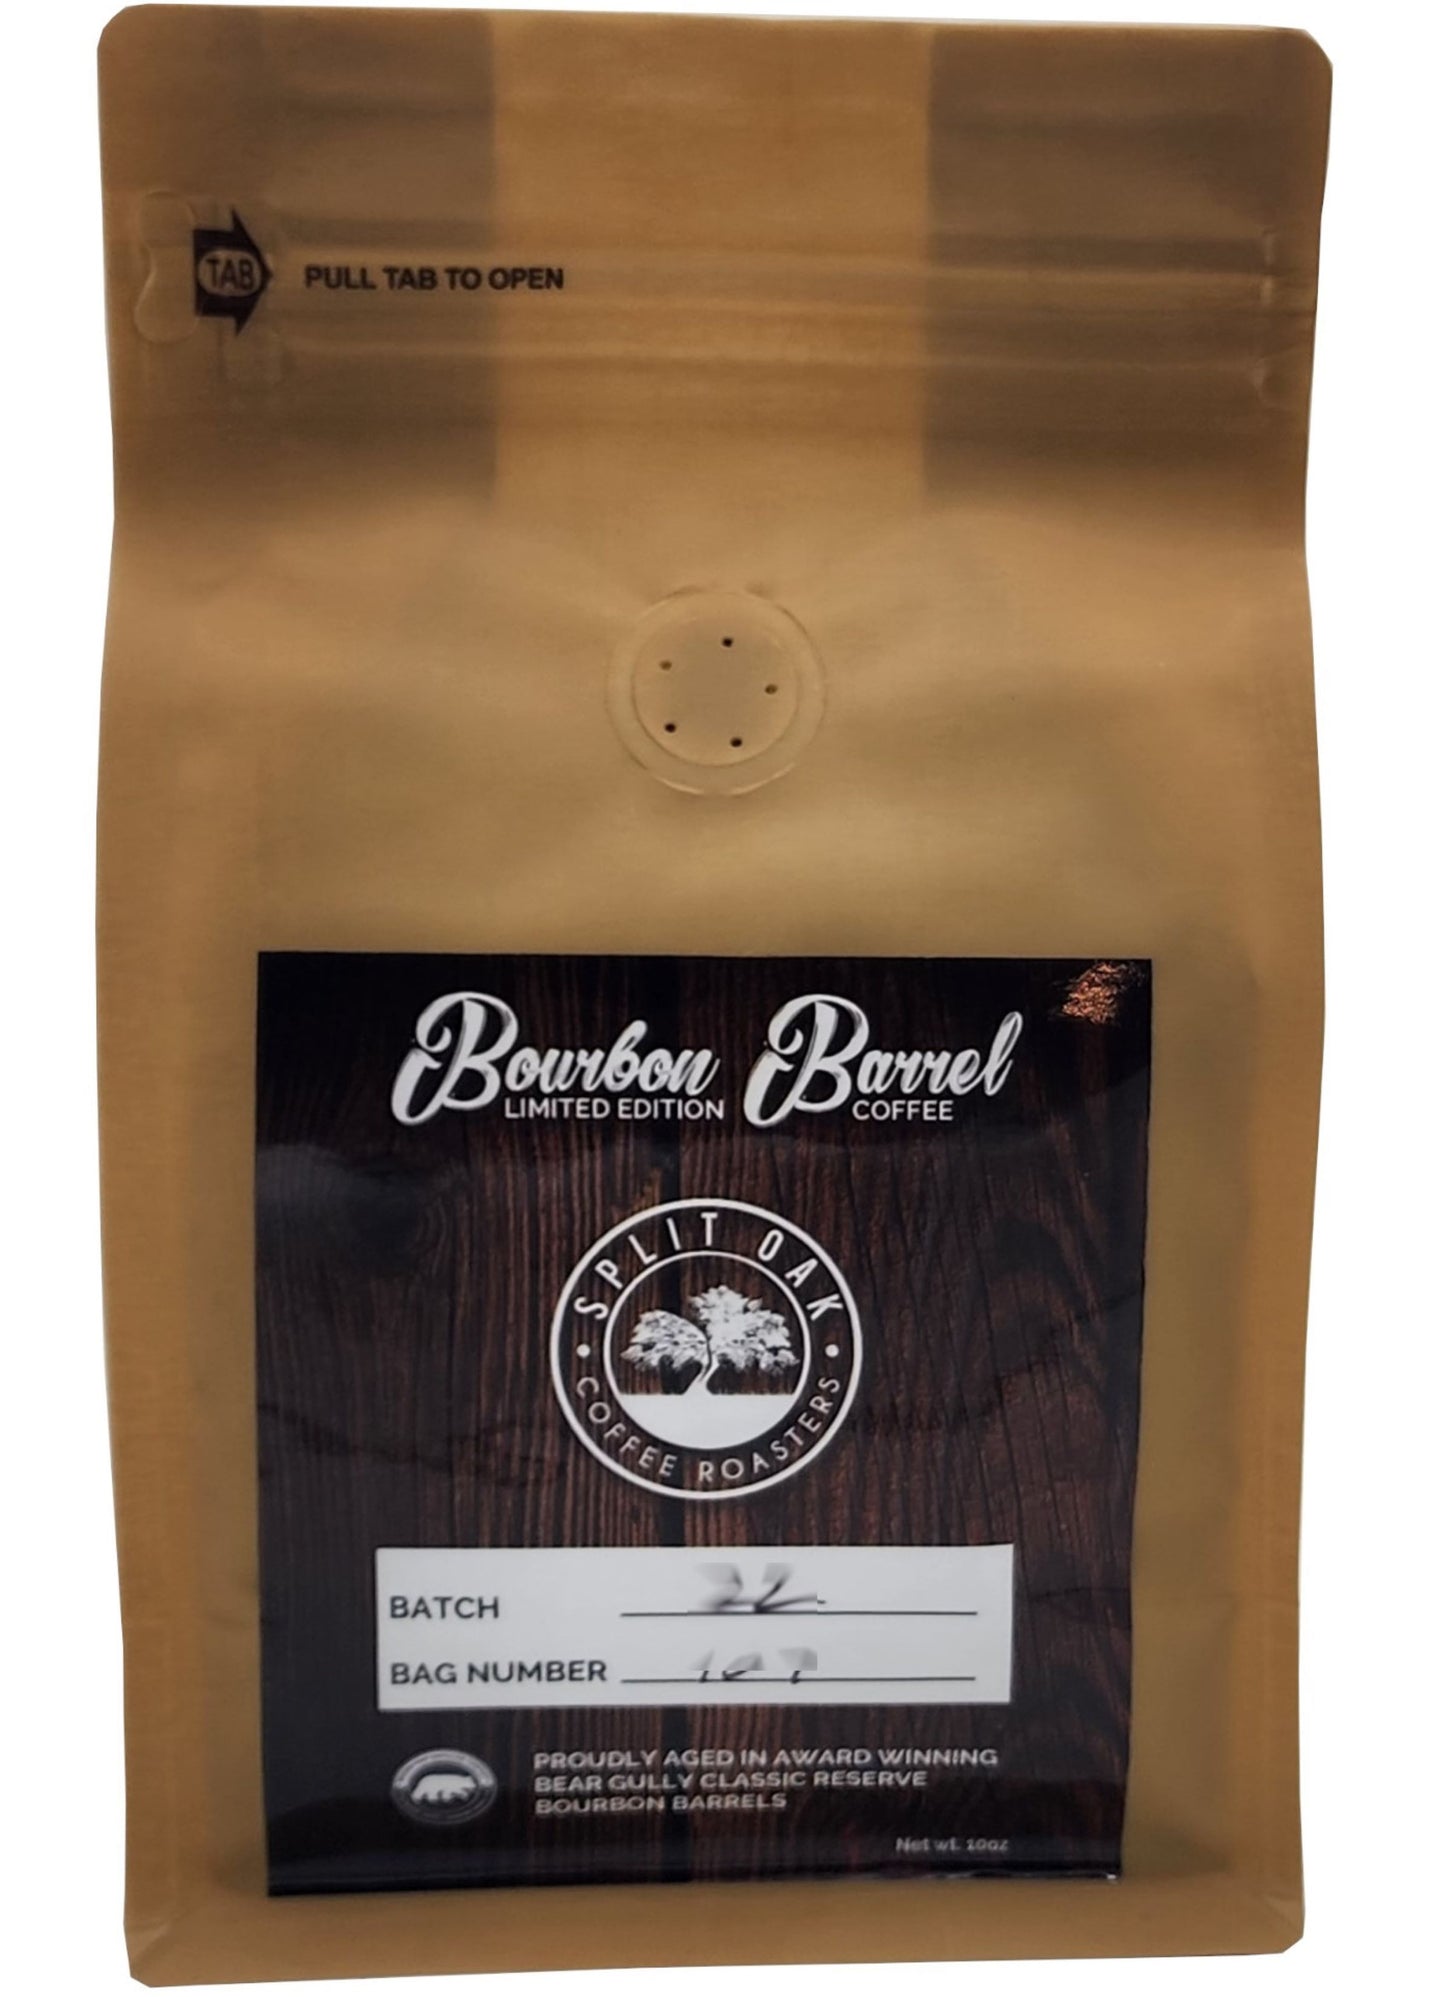 3 Pack Organic Bourbon Barrel Roasted Coffee Beans 10oz, Limited Edition Barrel